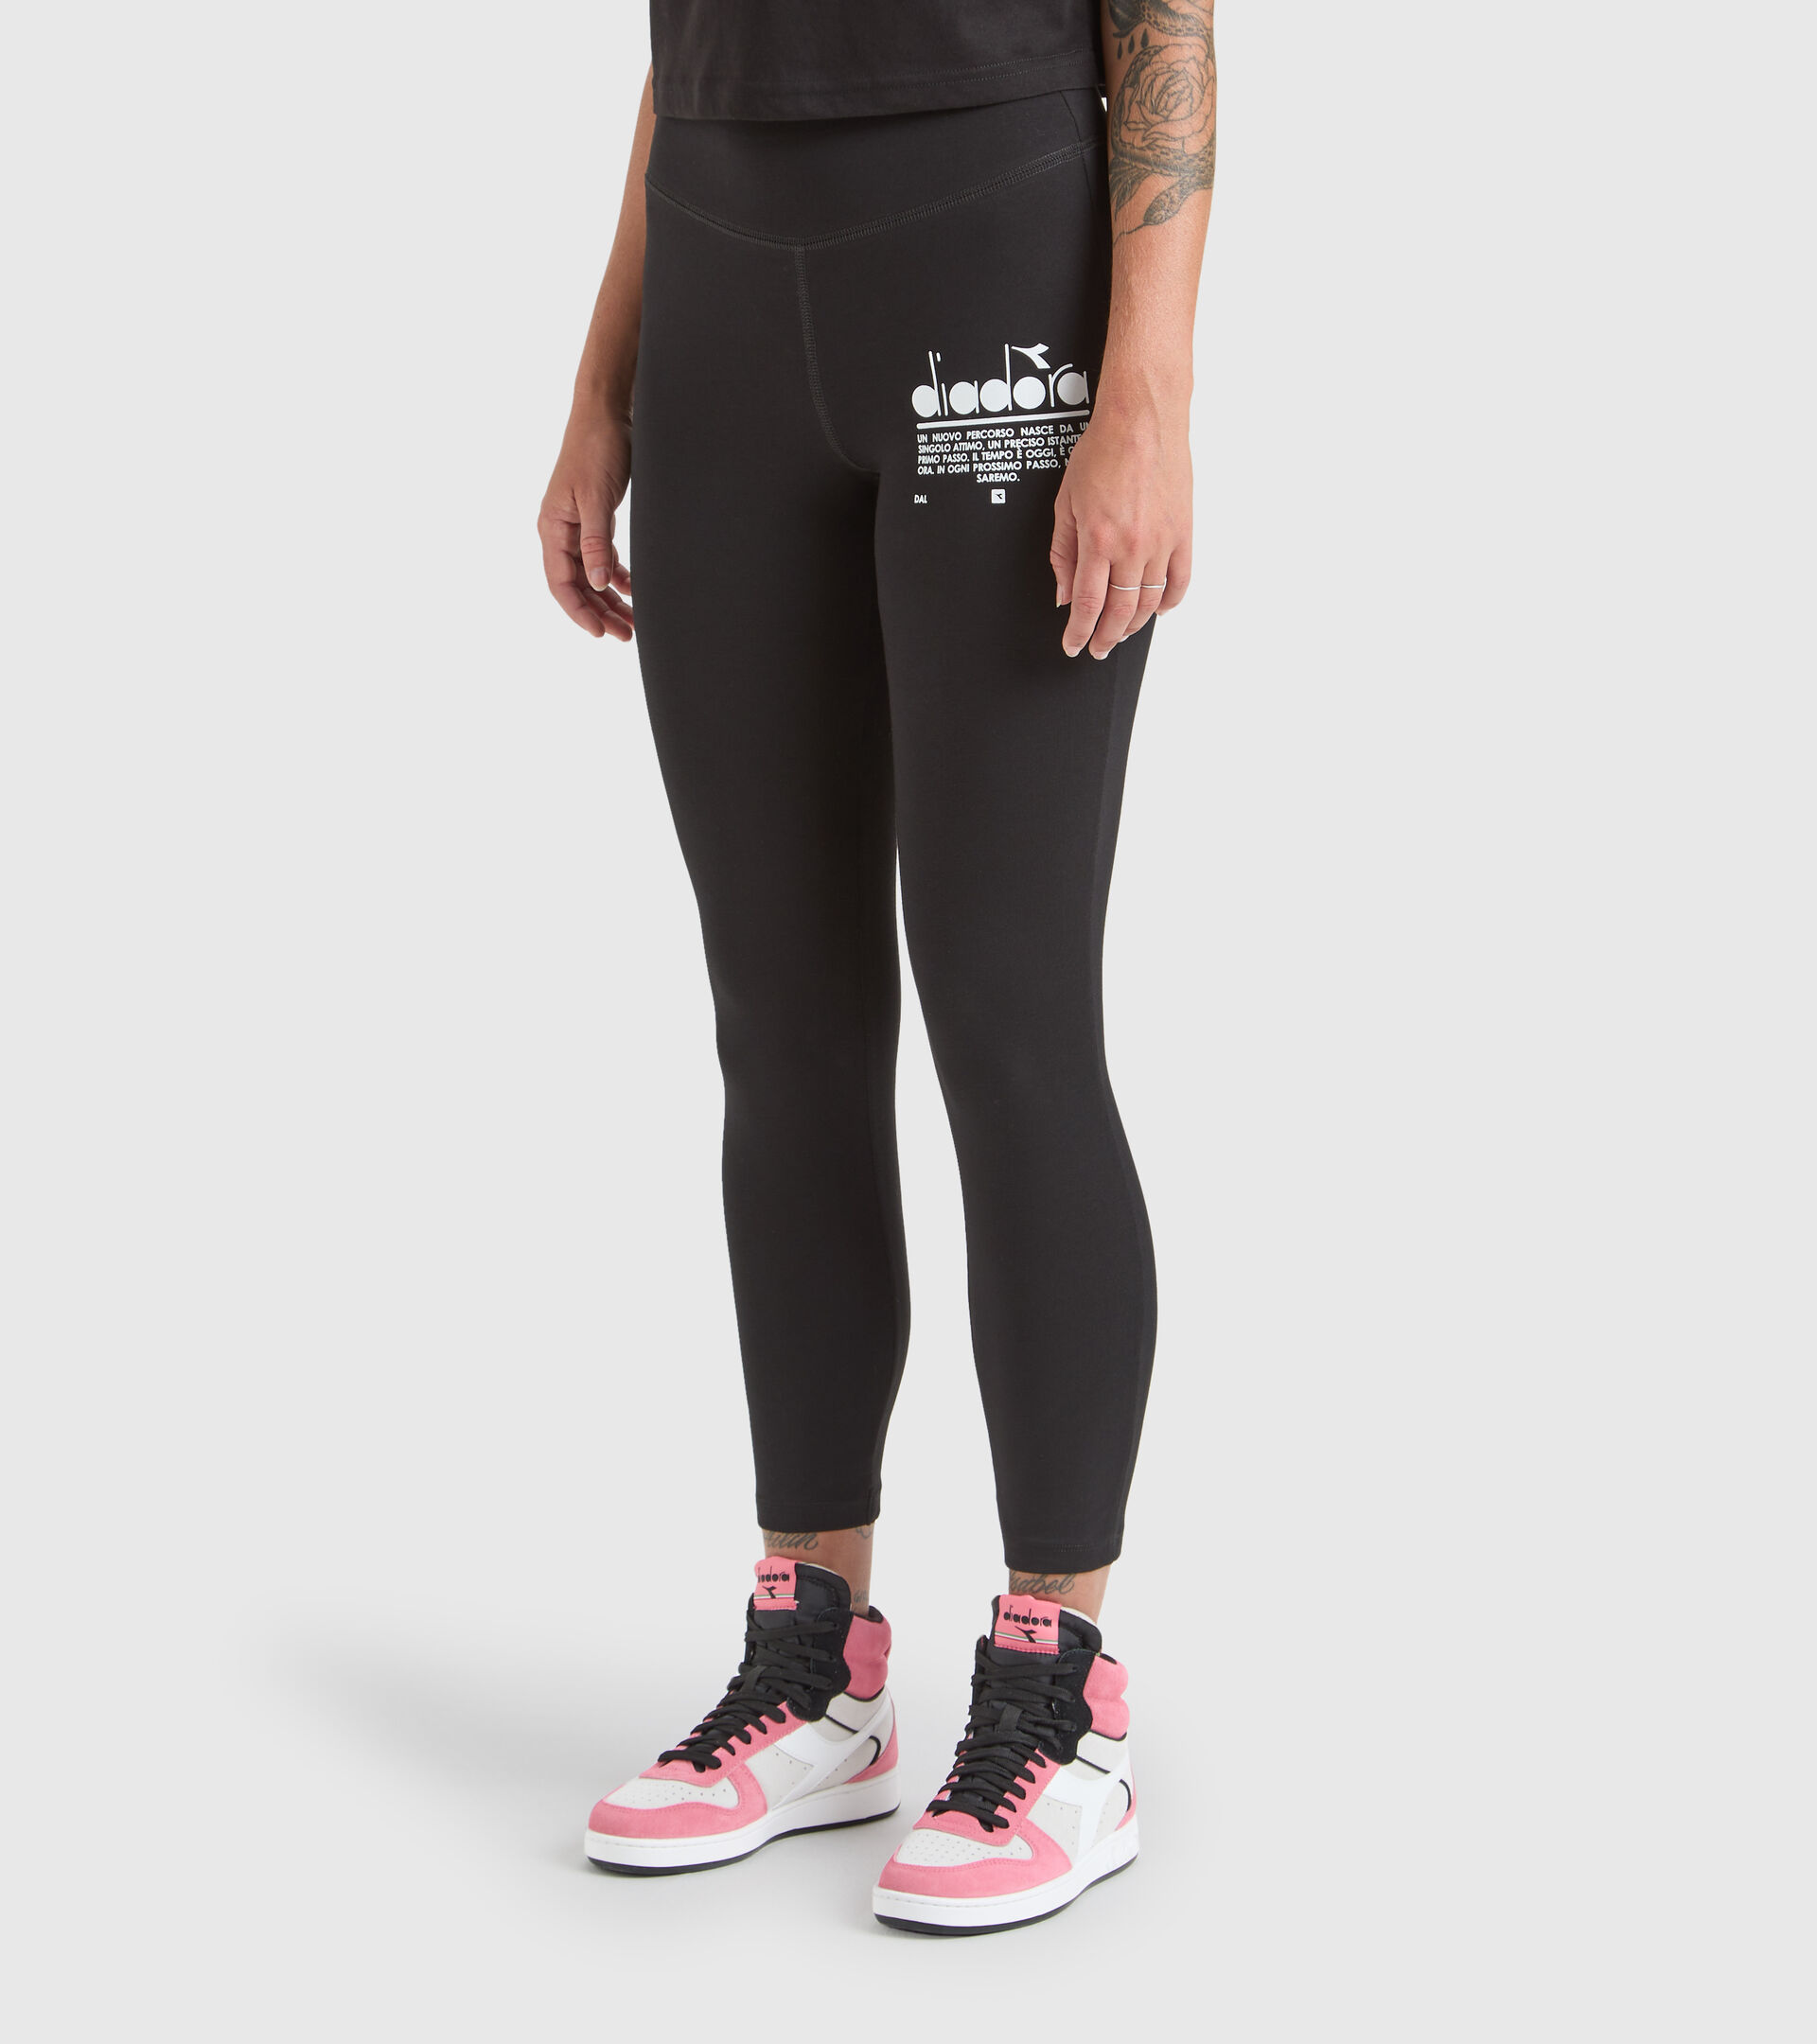 L. TIGHTS SKIN FRIENDLY Running leggings - Women - Diadora Online Store US